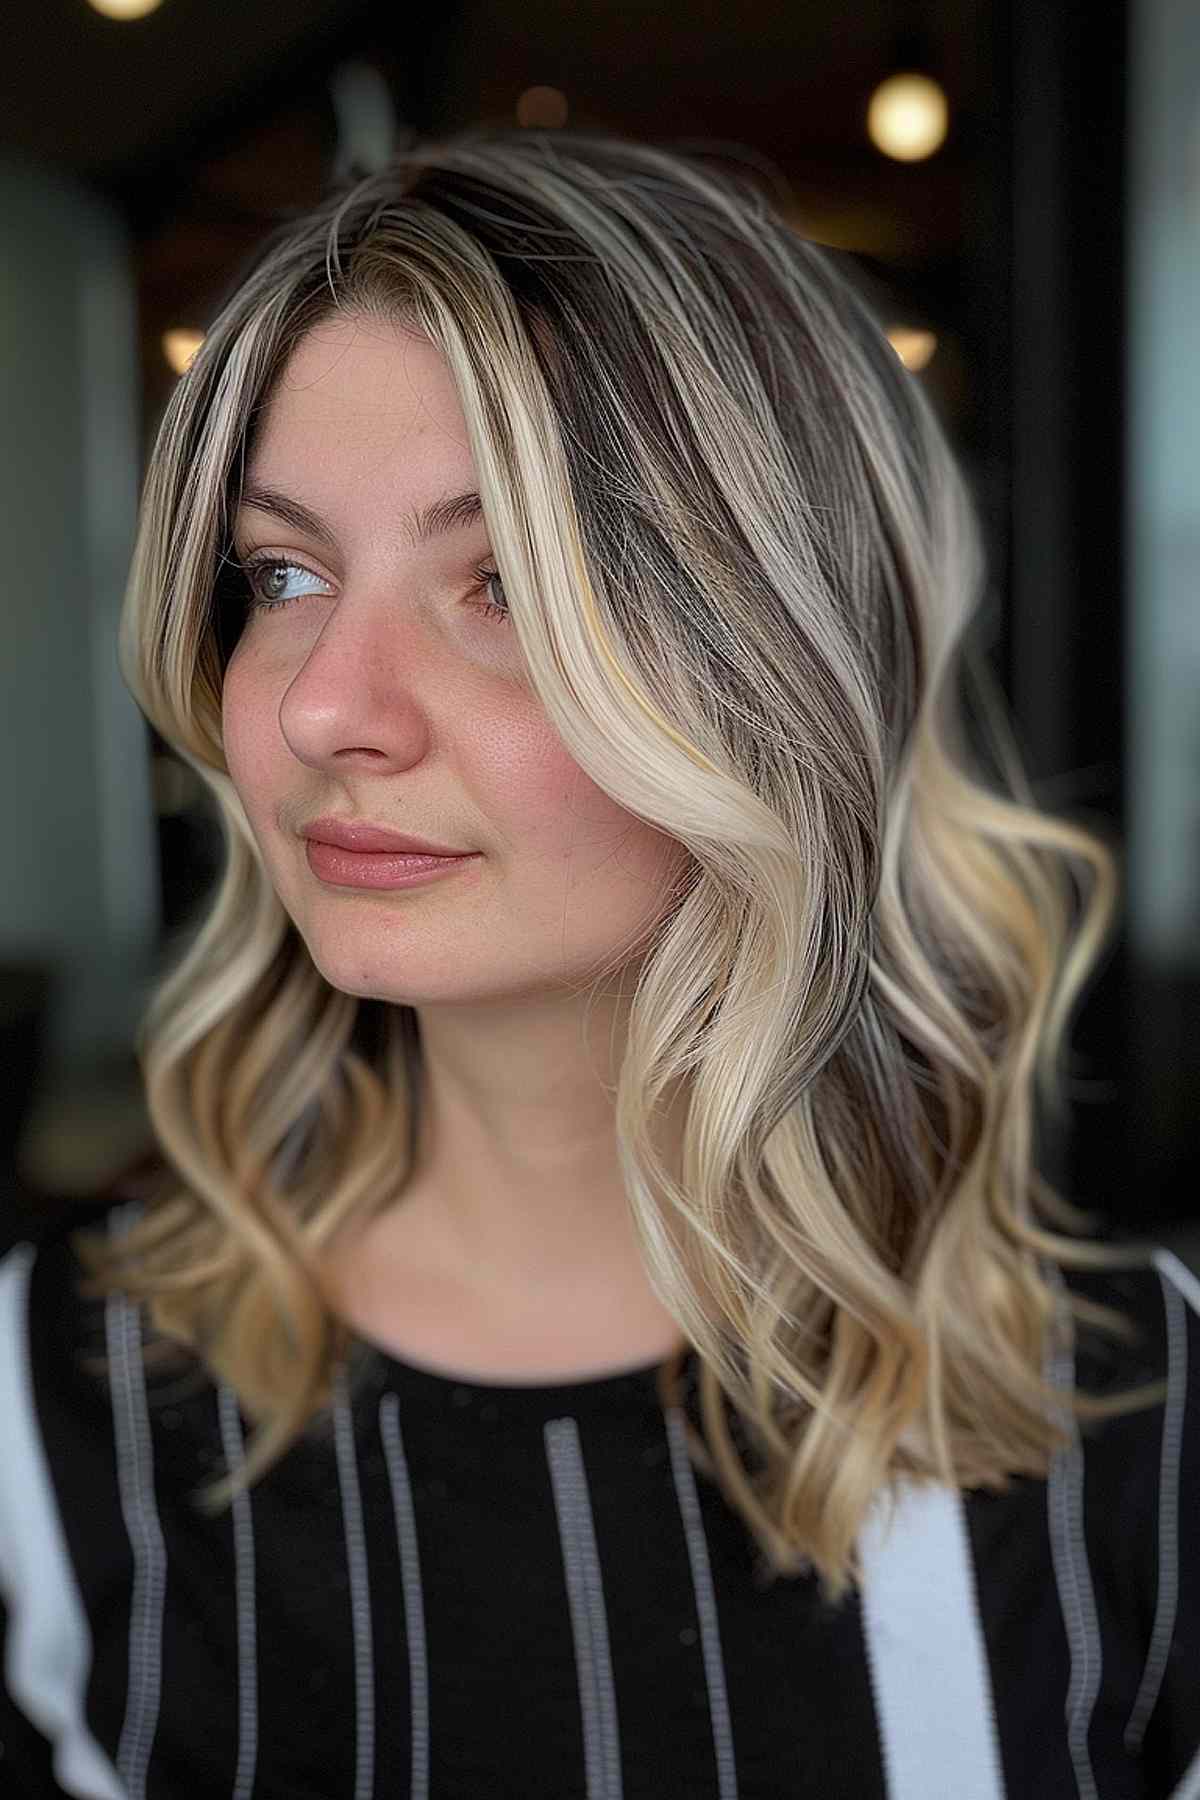 Medium-length dark hair with chunky light blonde highlights and soft waves